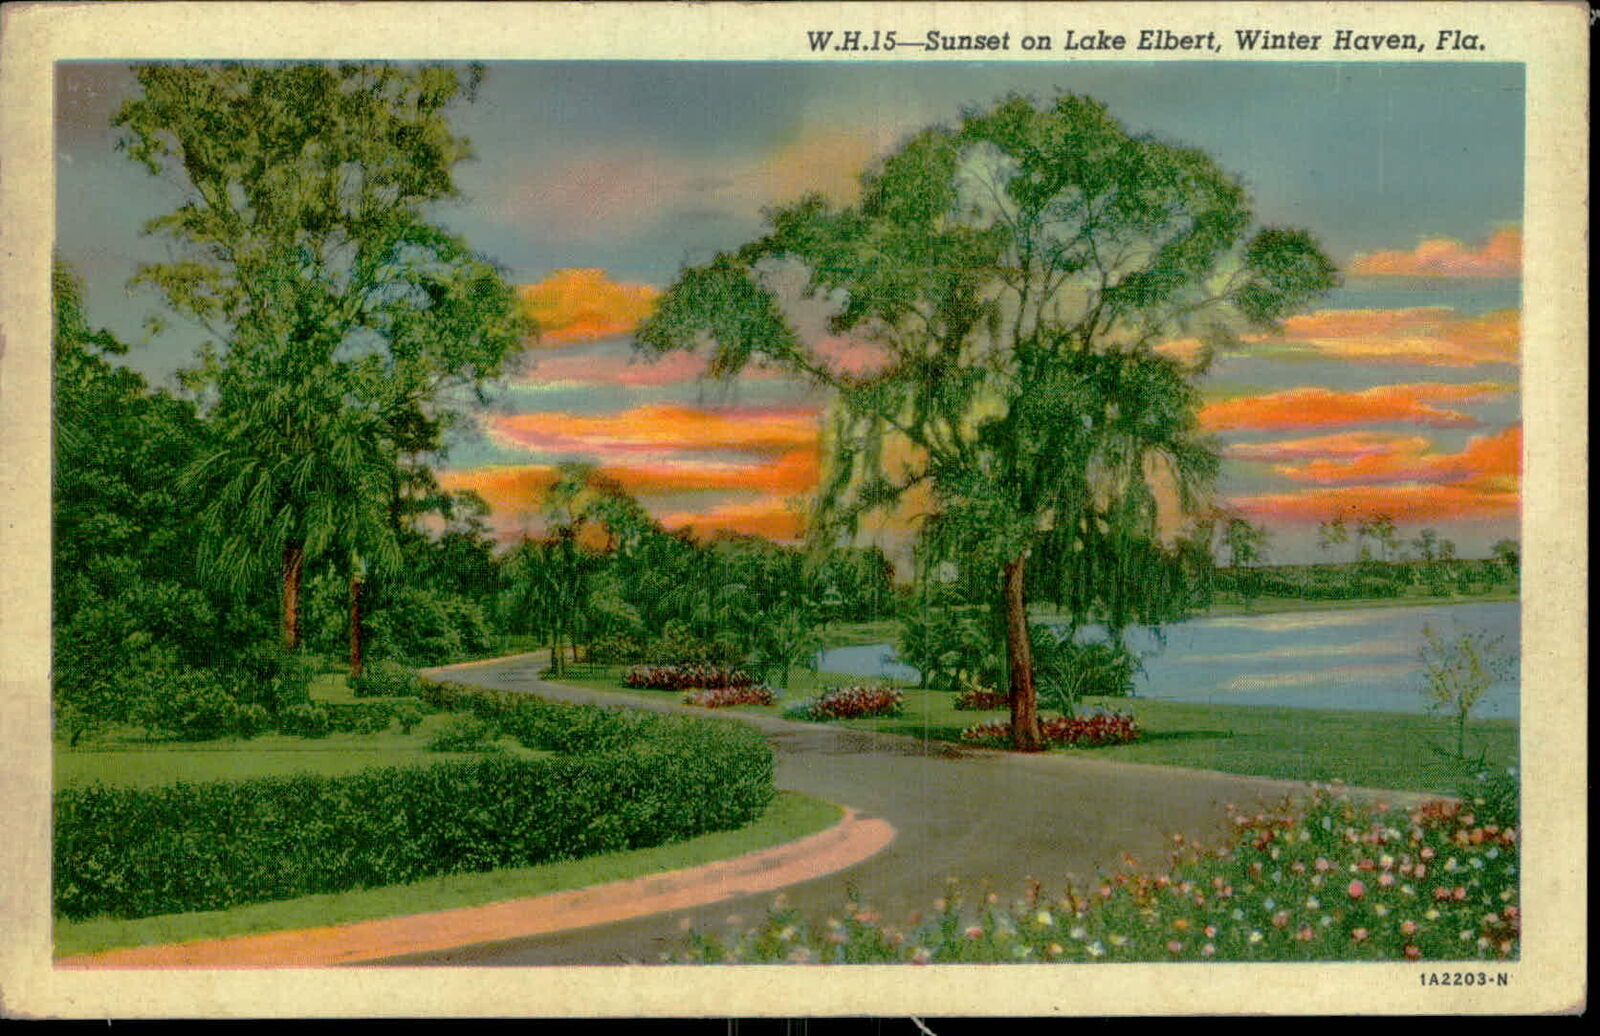 Postcard: W.H.15 Sunset on Lake Elbert, Winter Haven, Fla. 1A2203-N